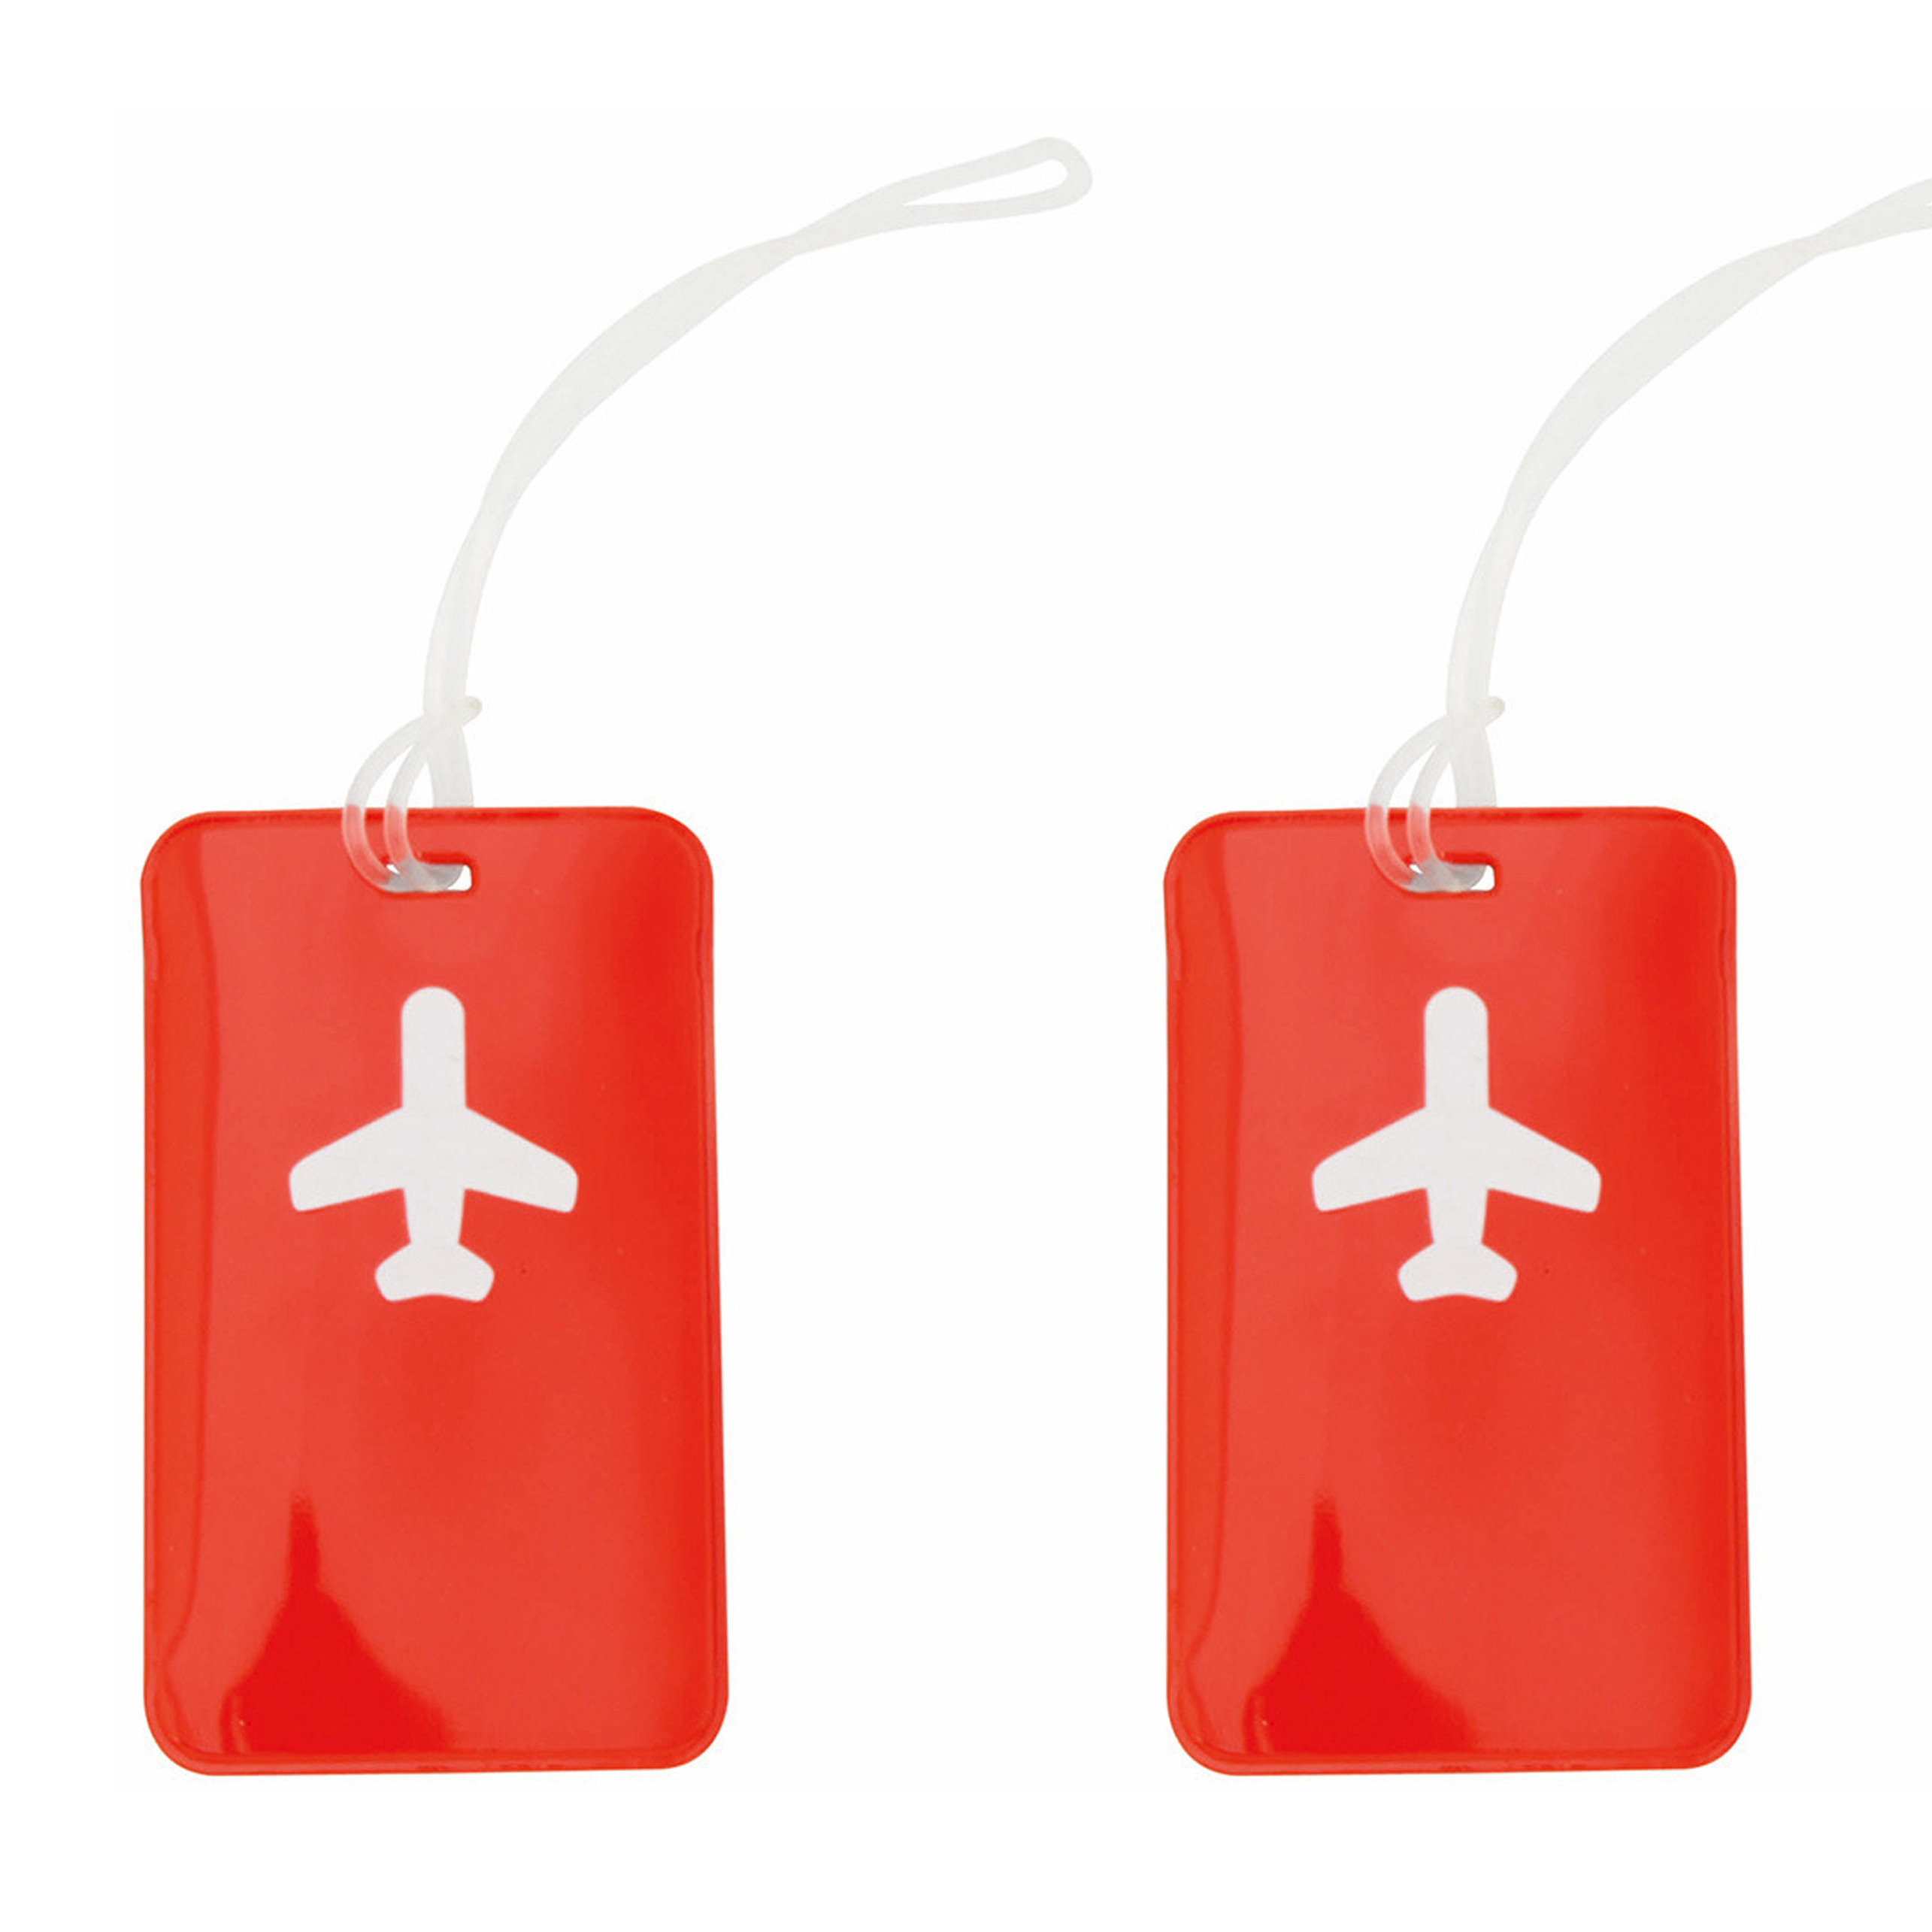 Kofferlabel van kunststof 2x rood 11 x 7 cm reiskoffer-handbagage labels